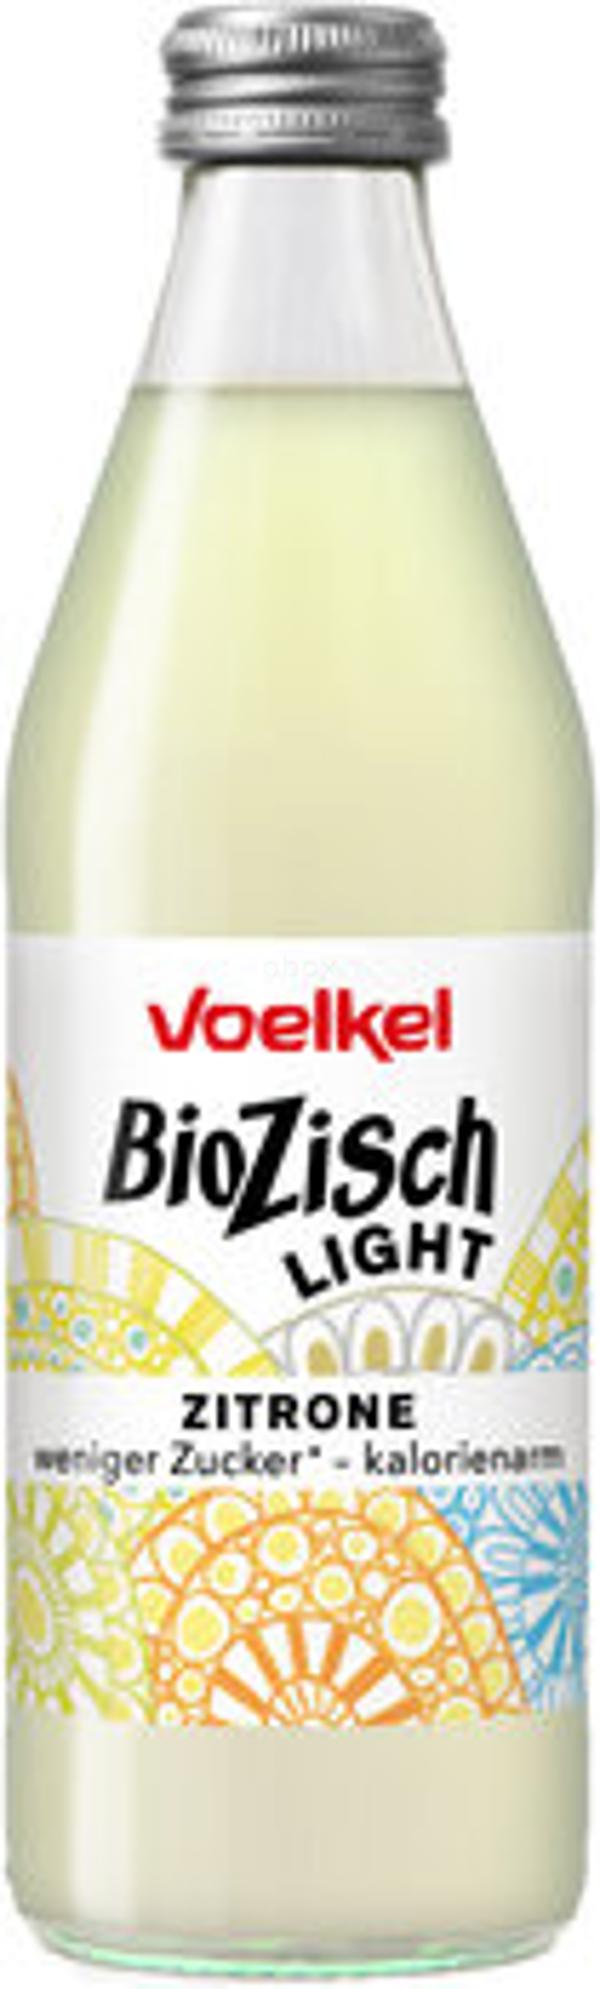 Produktfoto zu BioZisch light Zitrone naturtrüb 0,33l